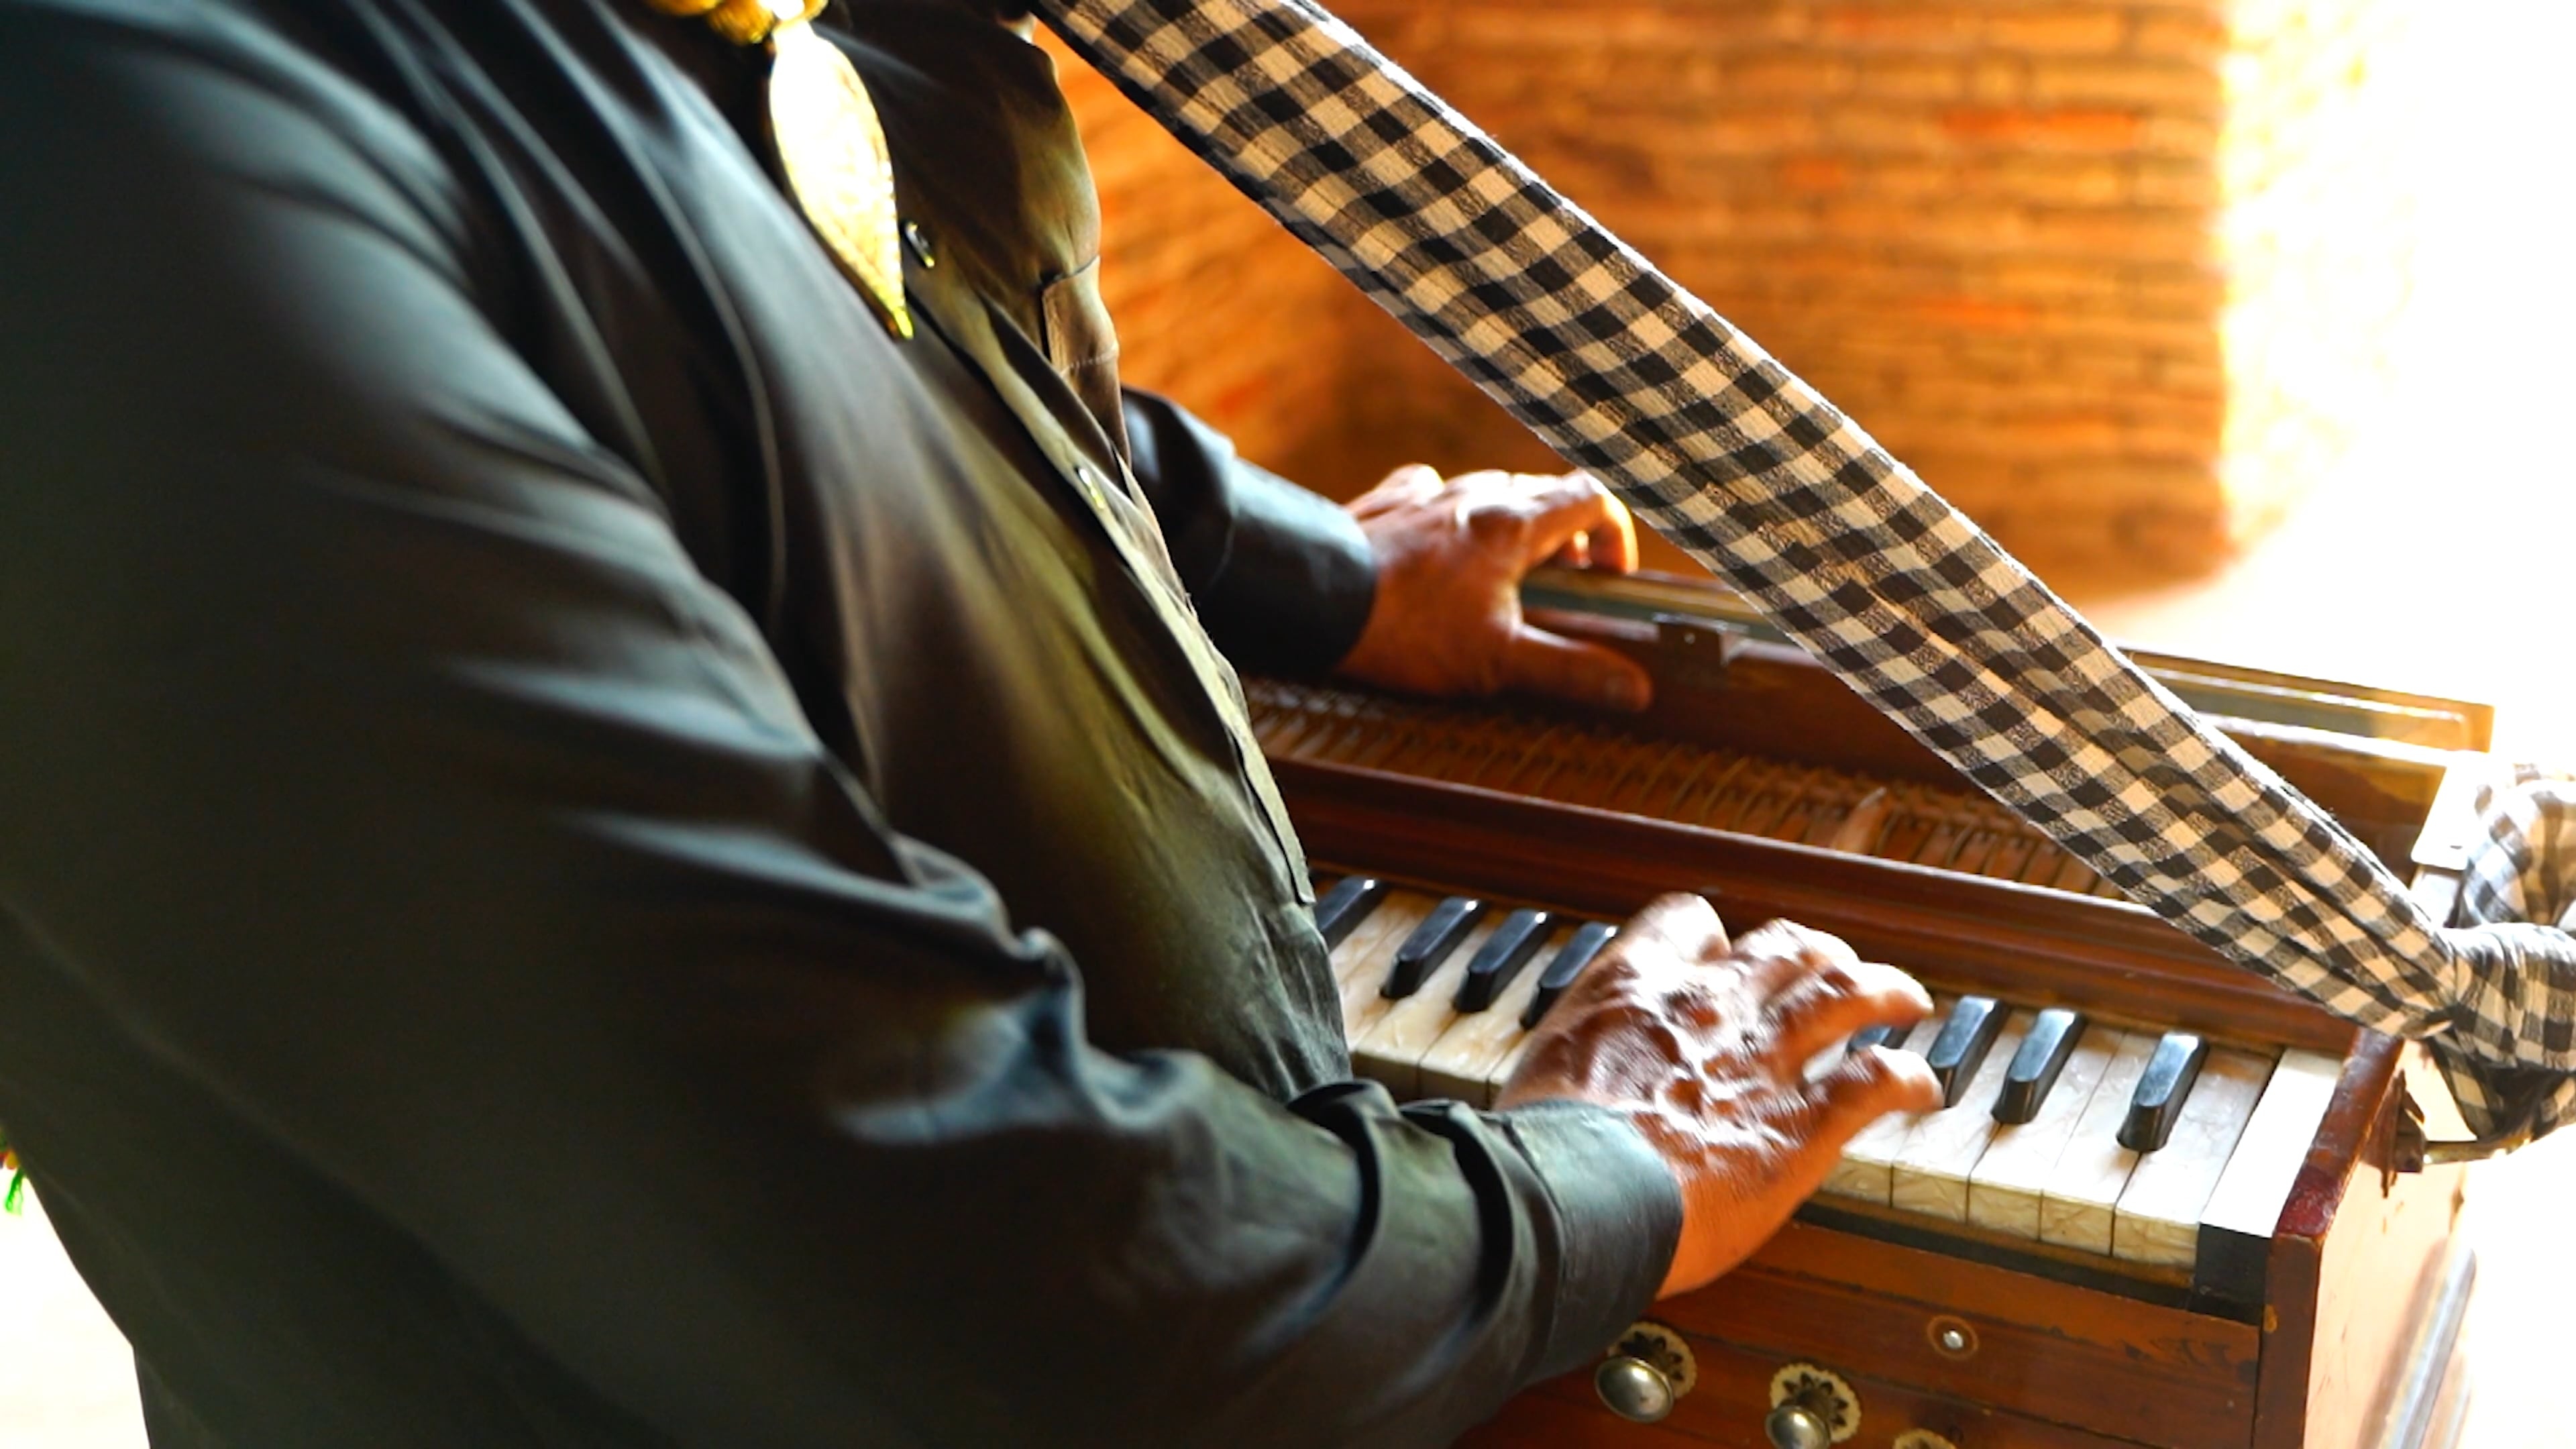 Harmonium: Portable Trap Organ, Keyboard Instrument, Musician Playing. 3840x2160 4K Wallpaper.